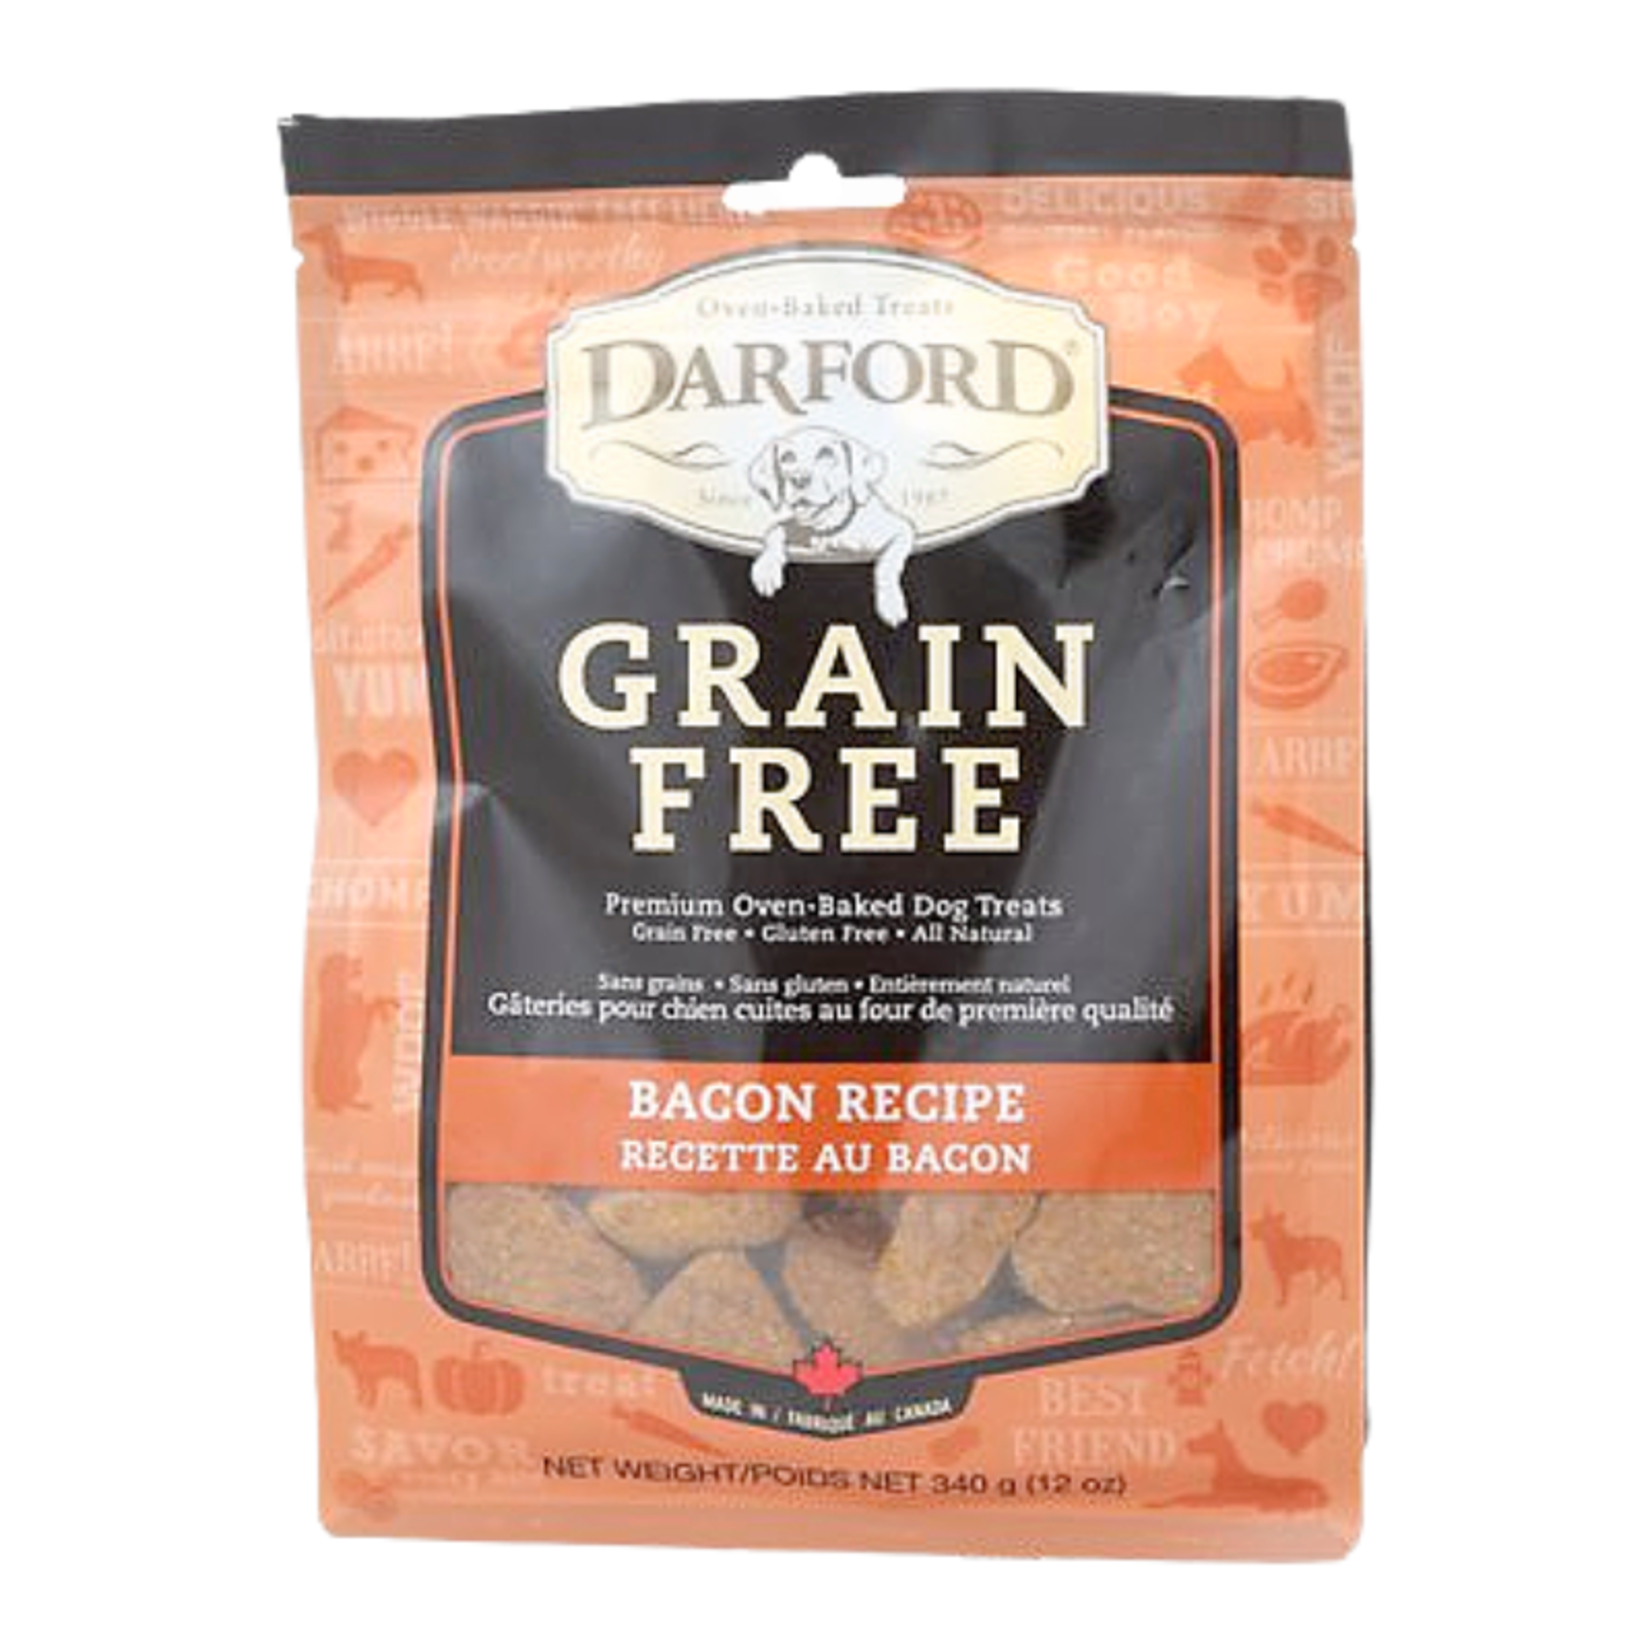 Darford 12 oz. - Bacon Recipe - Grain-Free Dog Treats - Darford